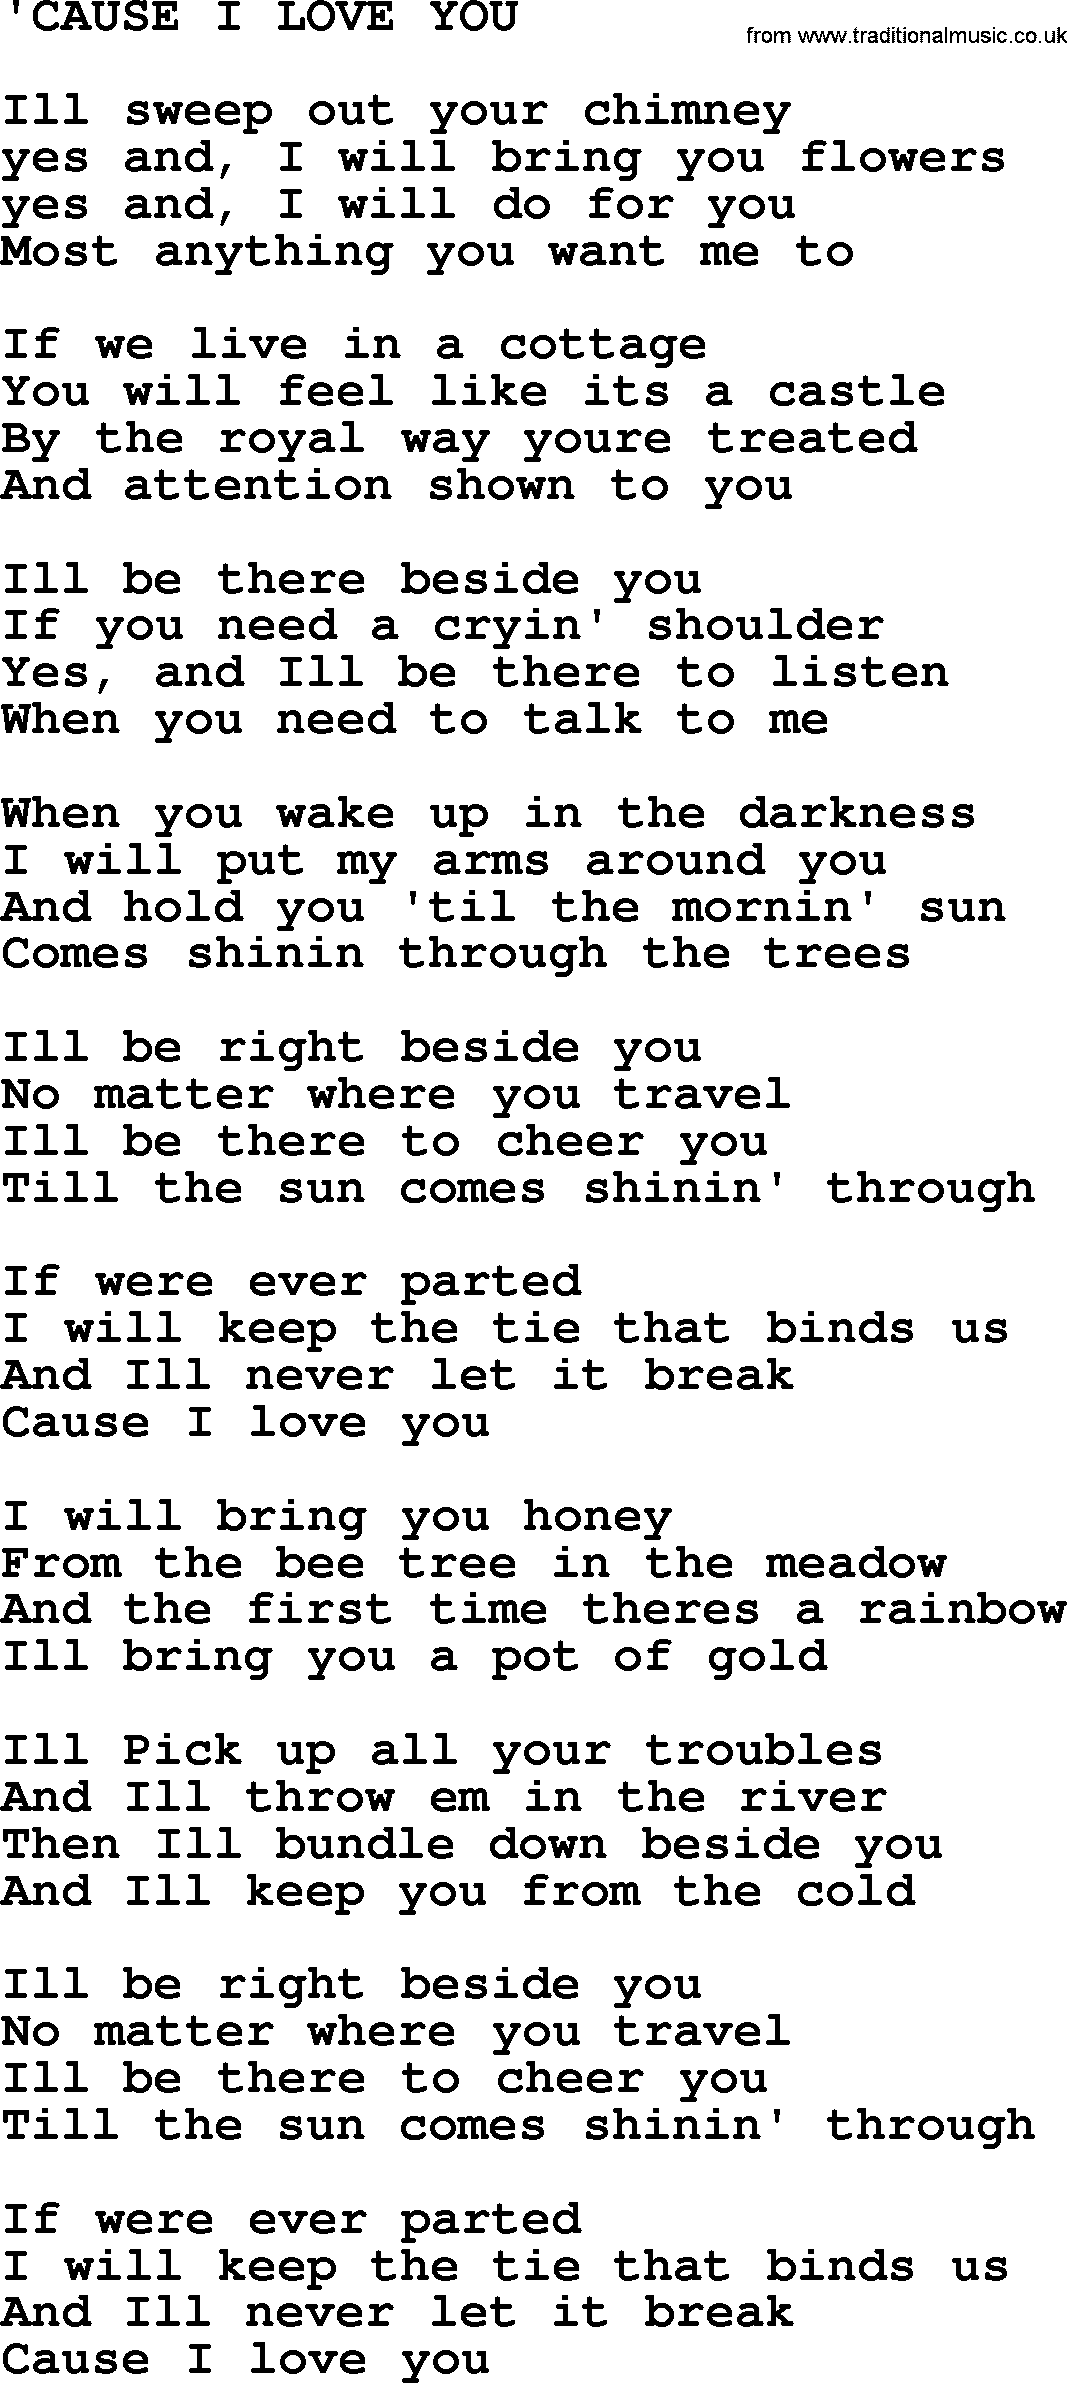 Johnny Cash song Cause I Love You.txt lyrics